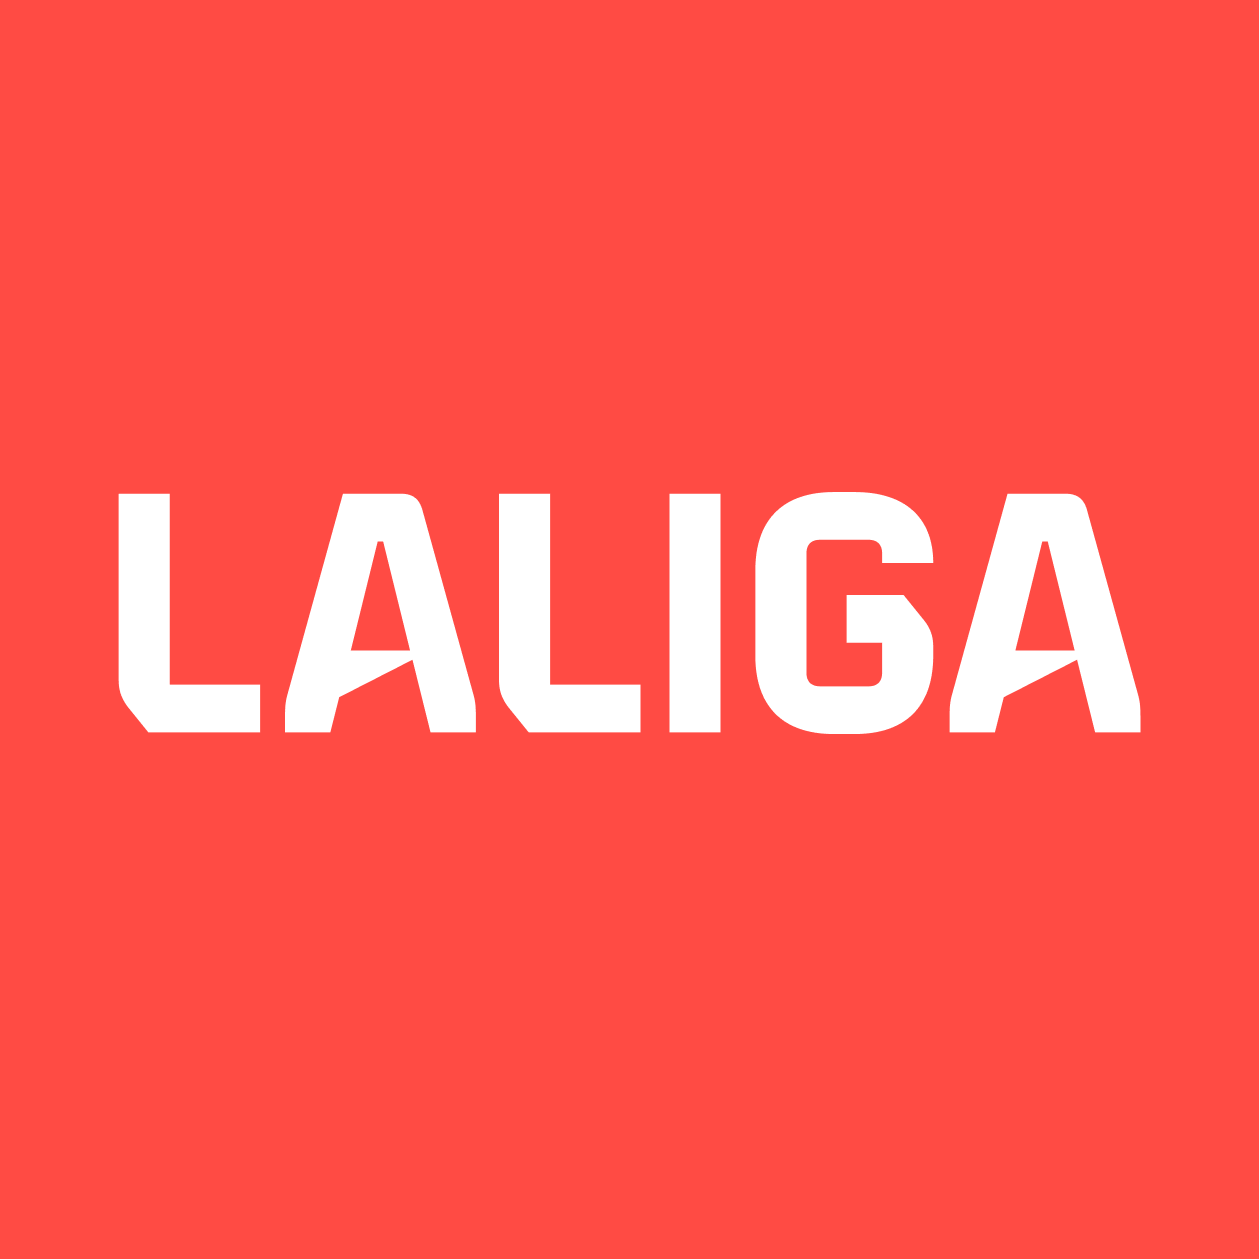 Police LALIGA Headline